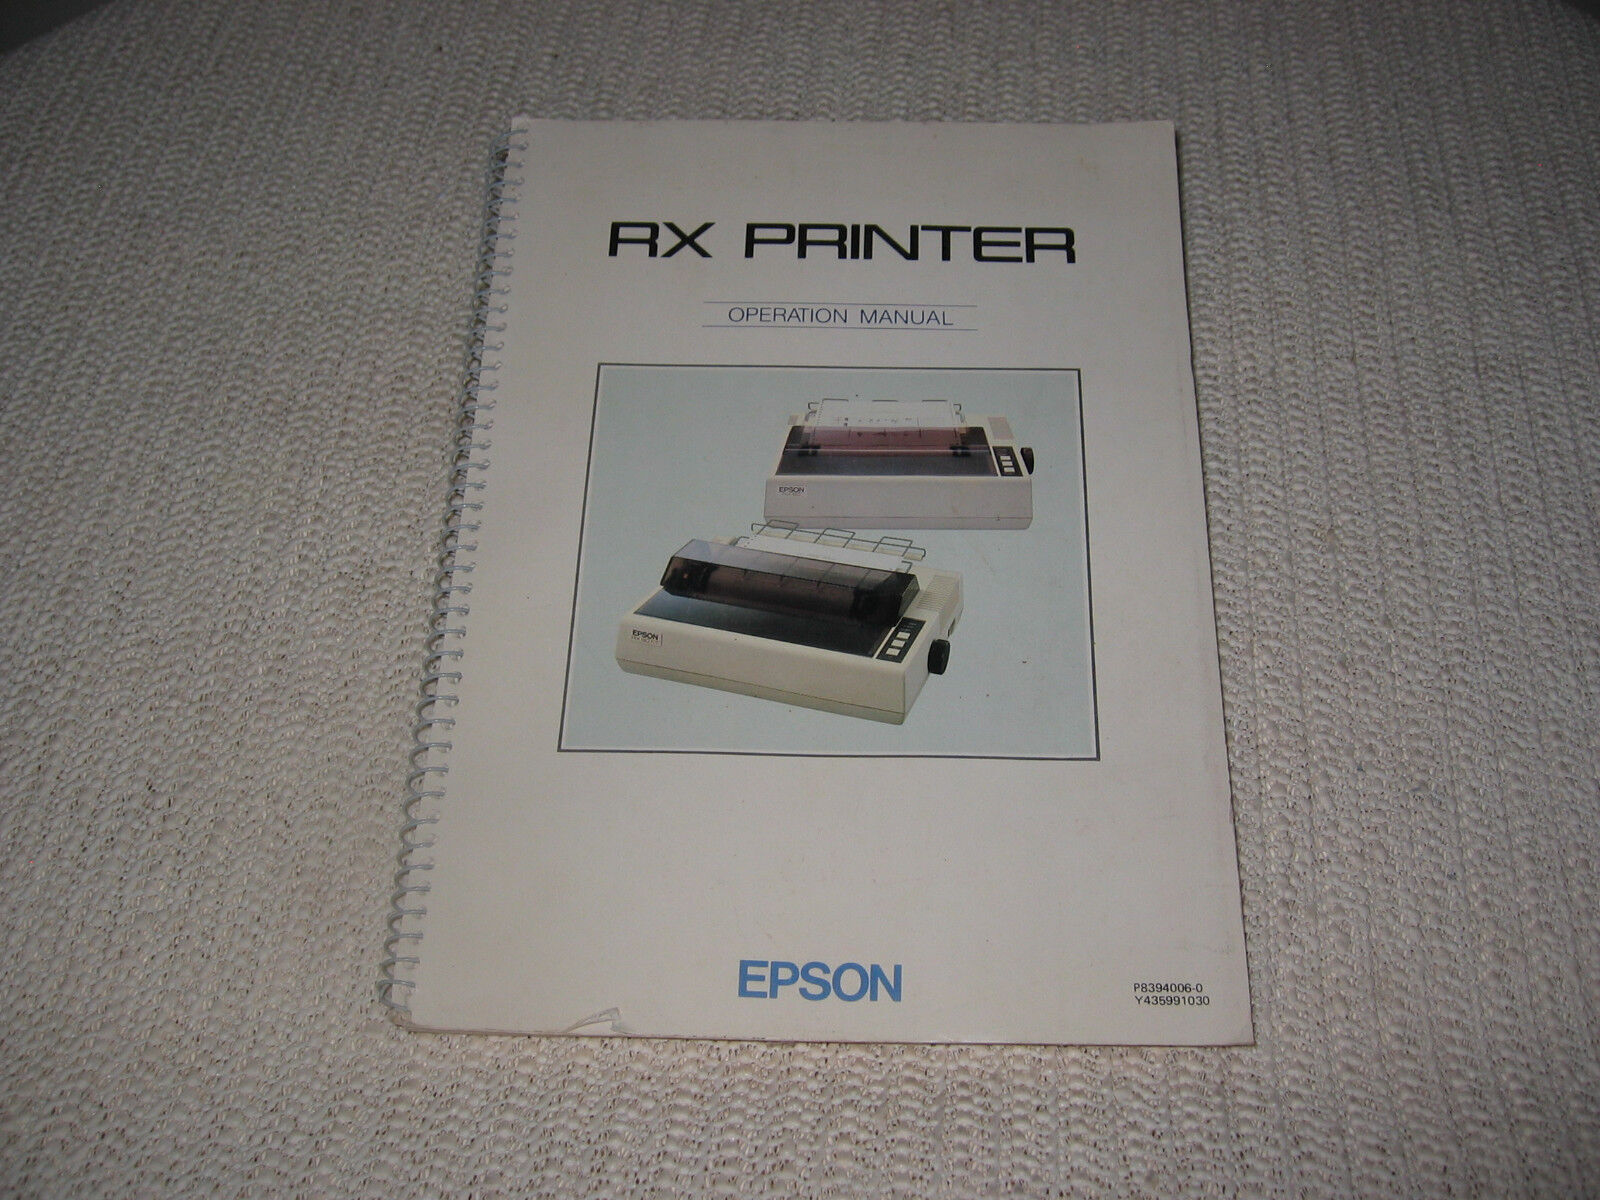 Vintage Epson RX Printer Operation Manual